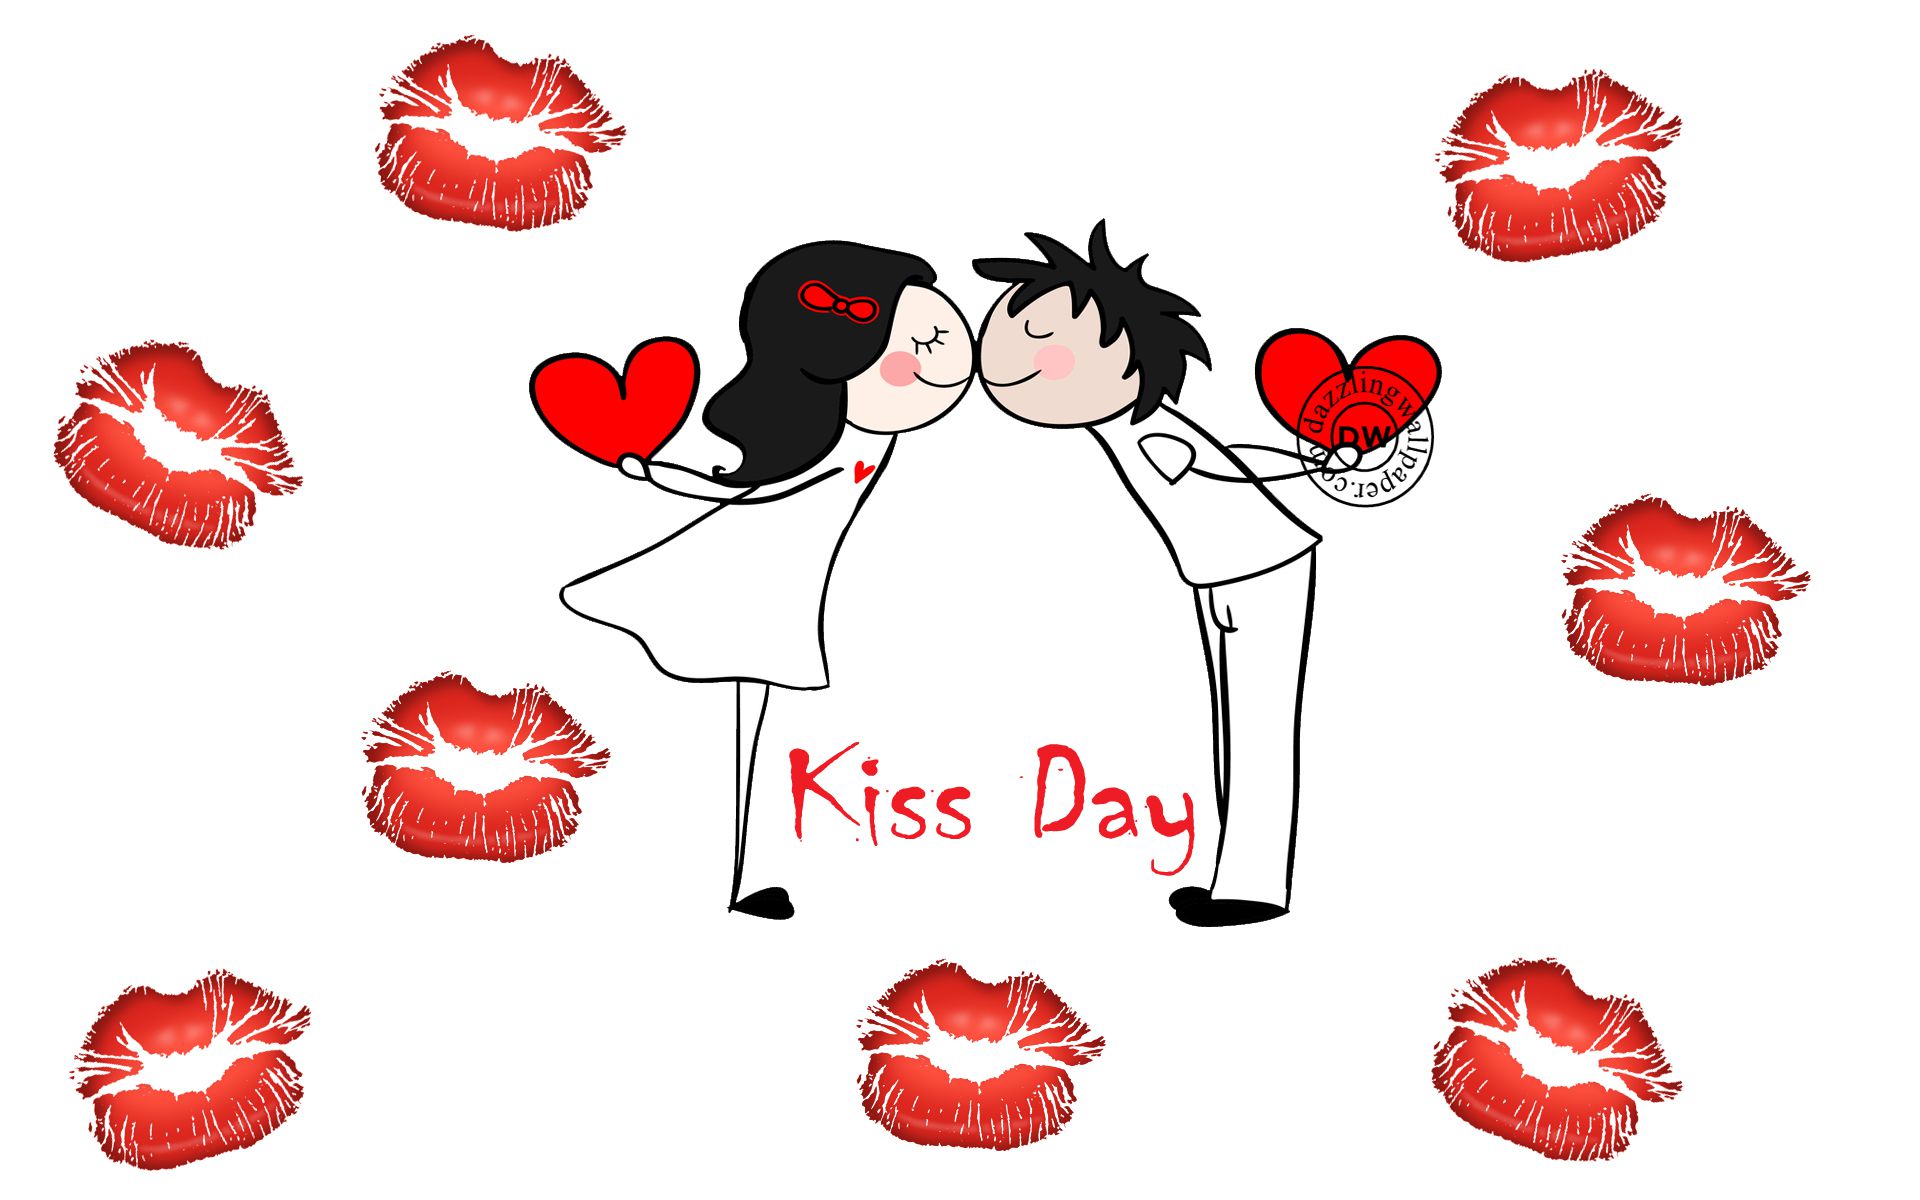 Kiss Day Wallpaper For Mobile Desktop1 Cgfrog